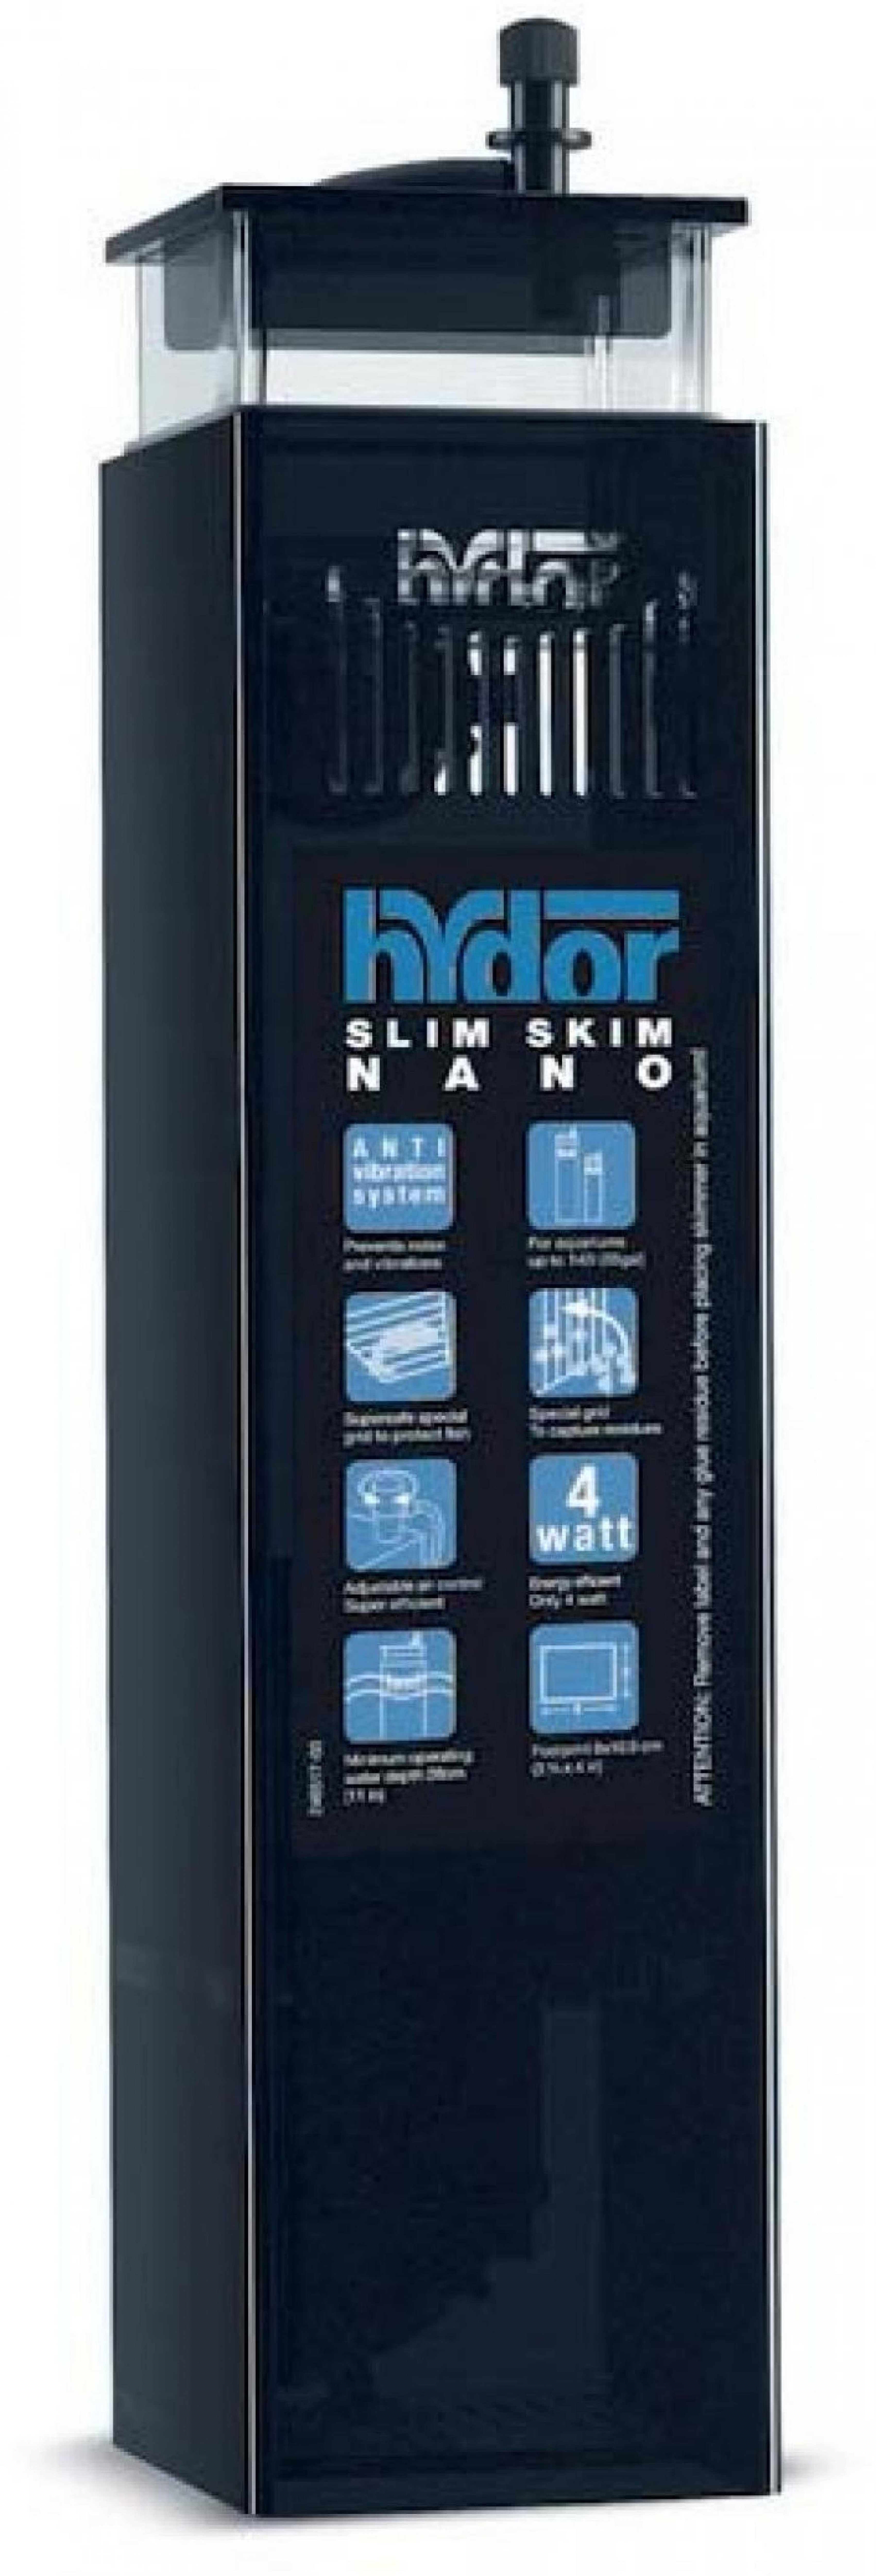 Hydor SLIM SKIM NANO 135.35 скиммер внутренний для морских аквариумов 60-140 л, S03200